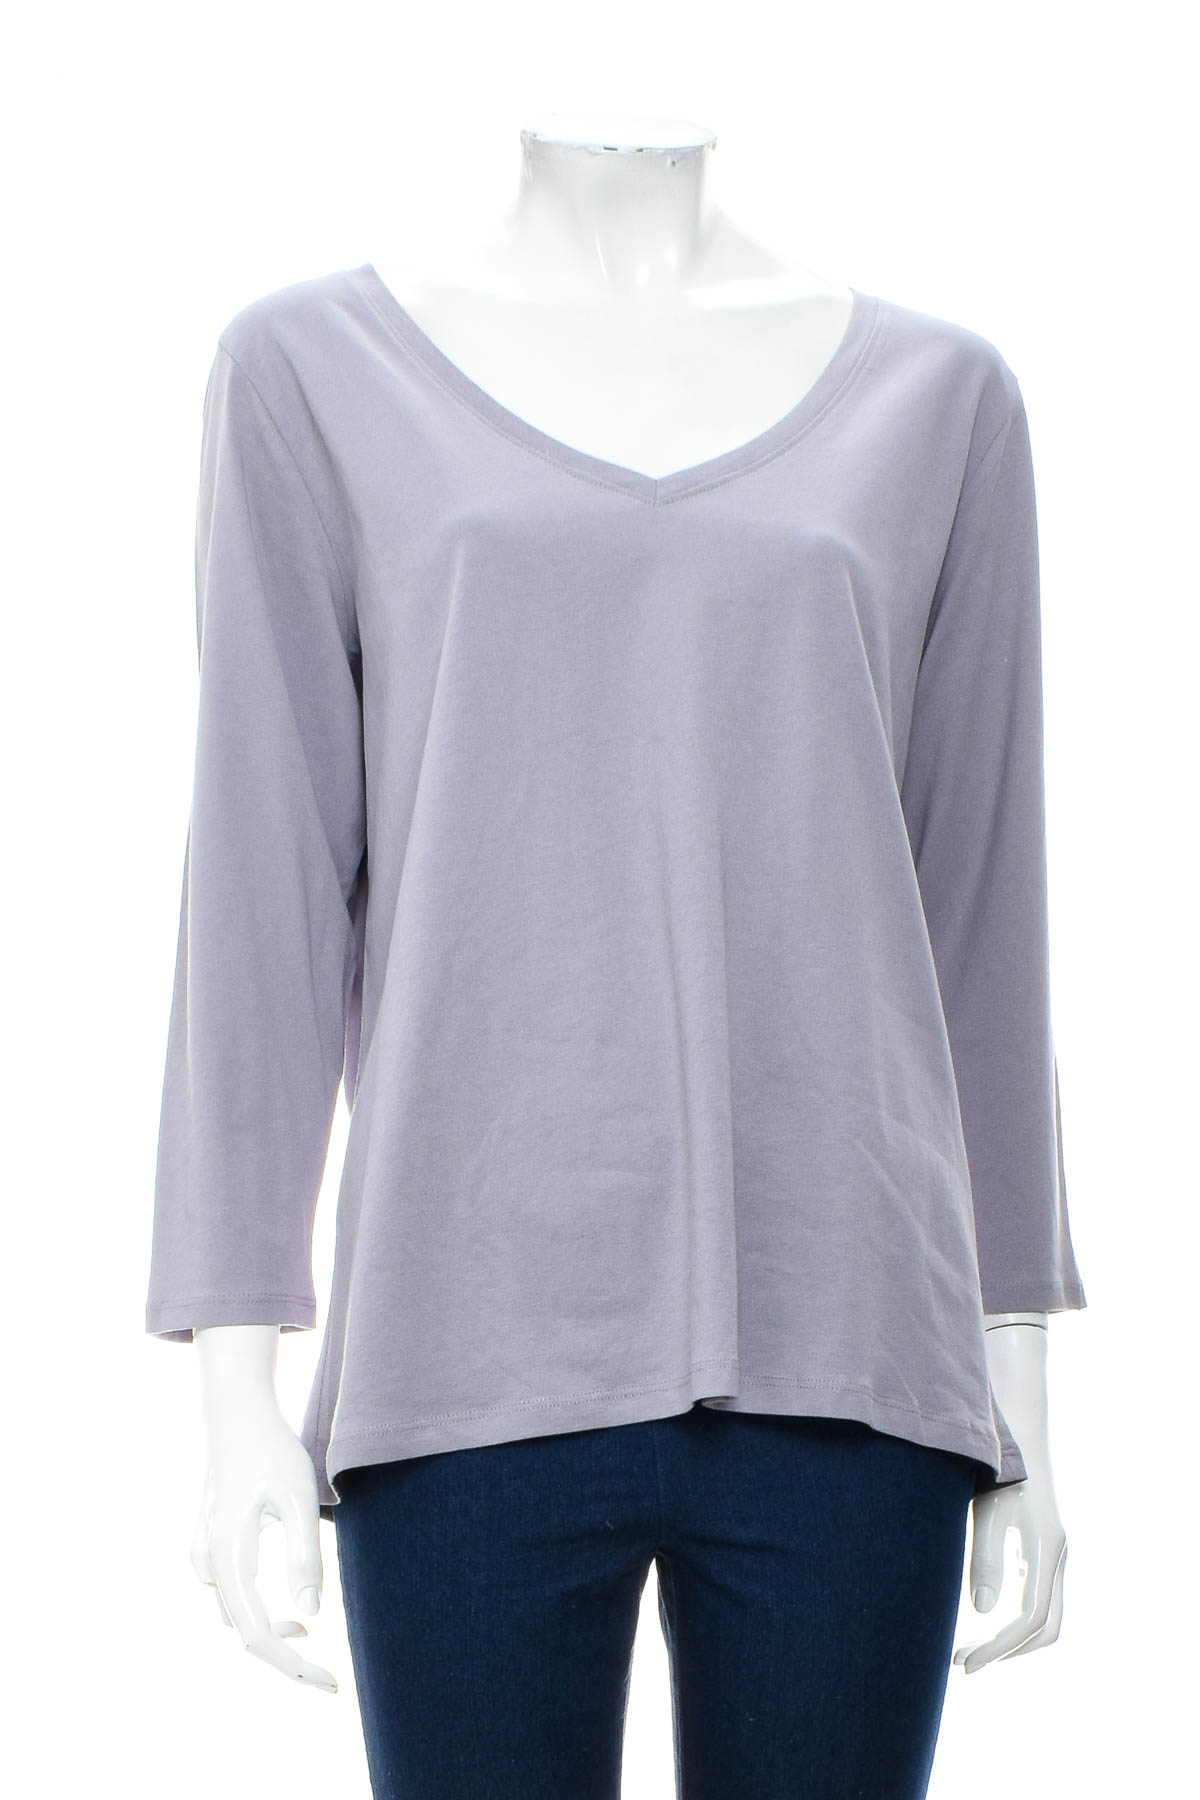 Women's blouse - Australian Cotton - 0